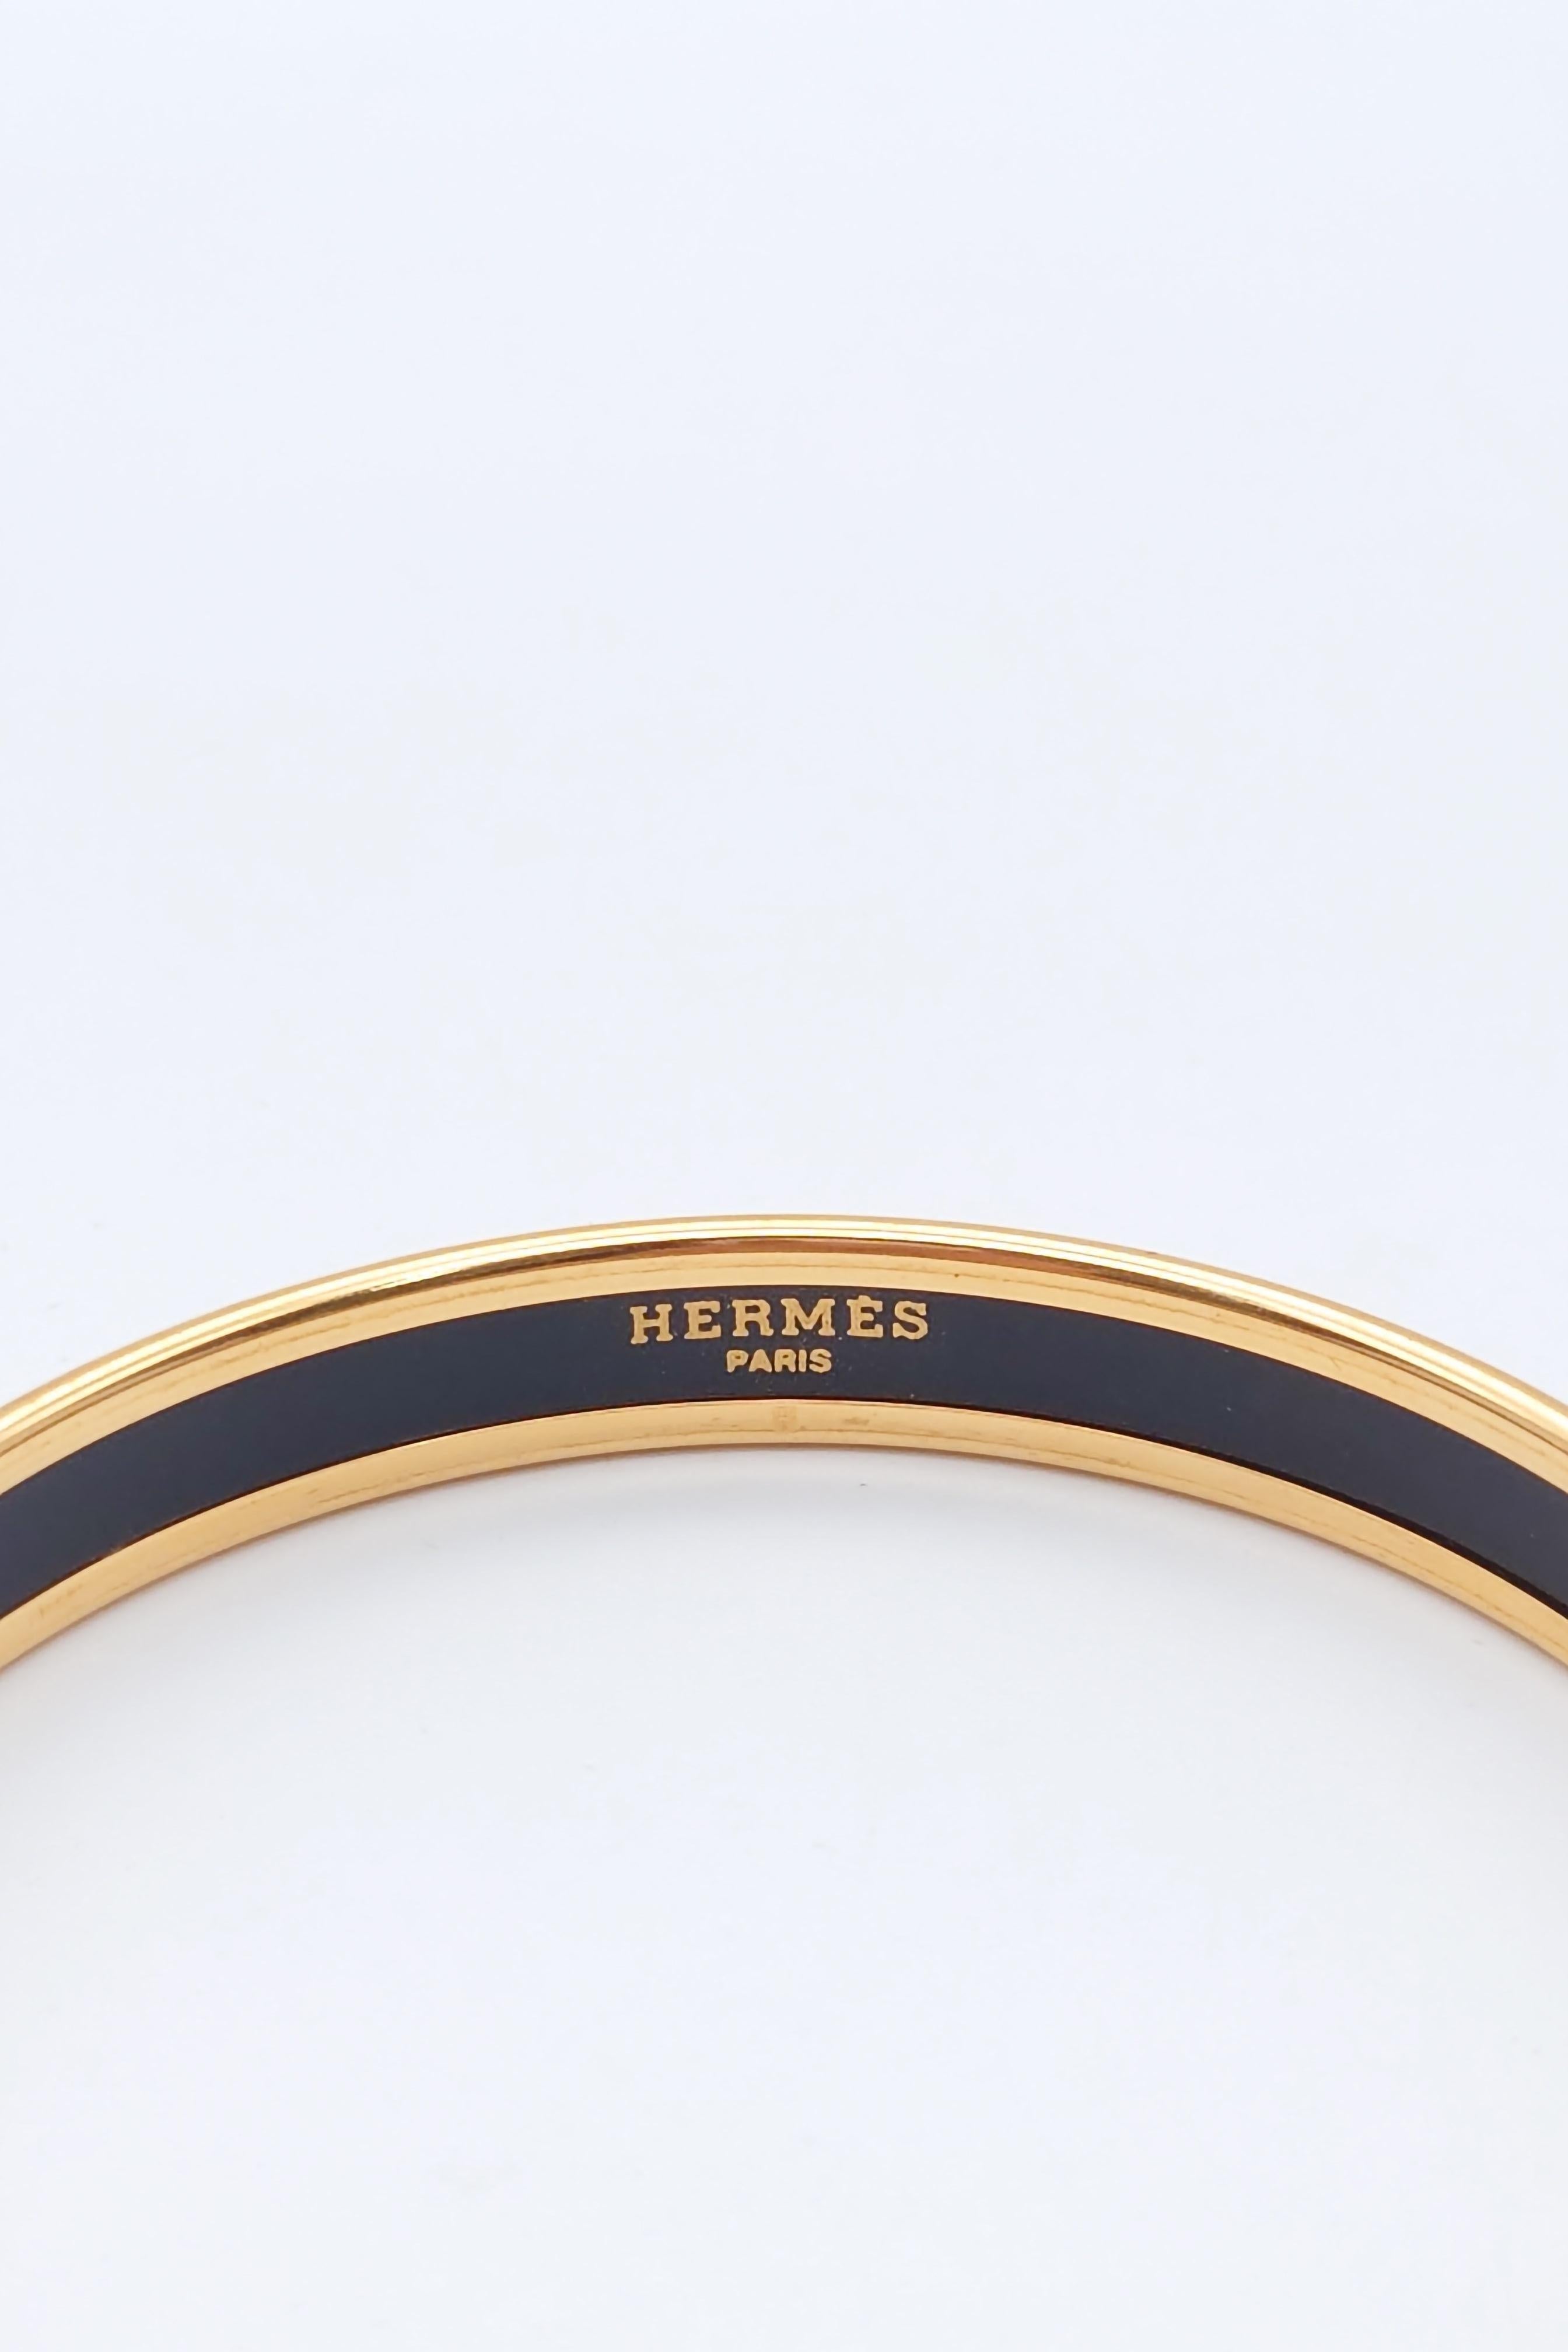 Authentic Hermes Armband Vintage Emaille Armreif Band für Damen oder Herren